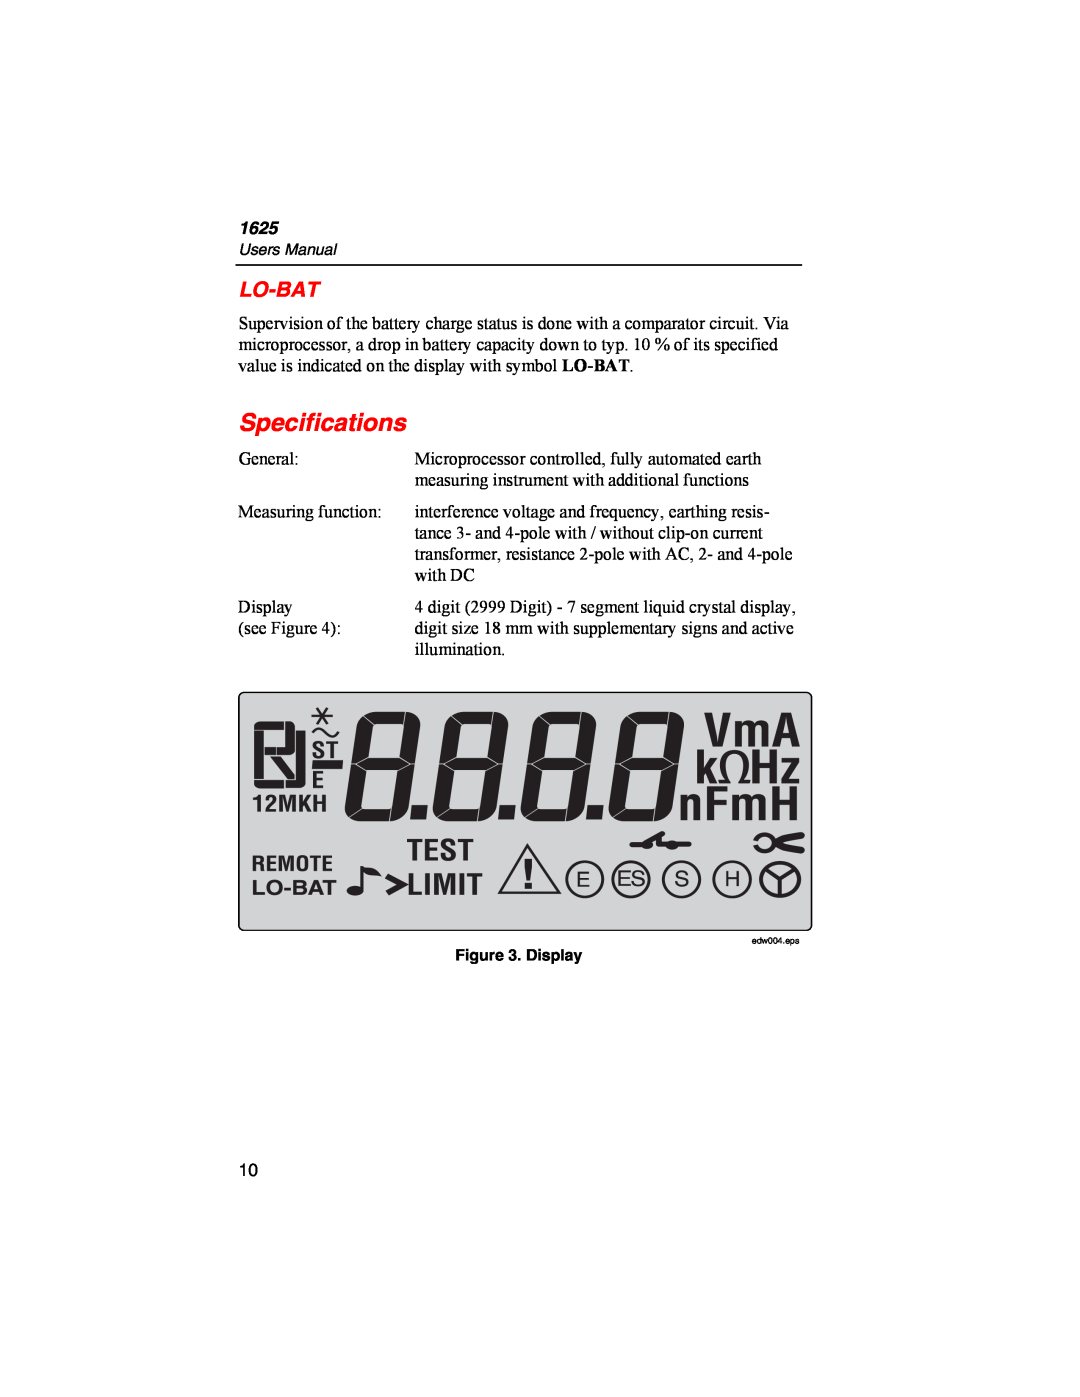 Fluke 1625 user manual Specifications, Lo-Bat 